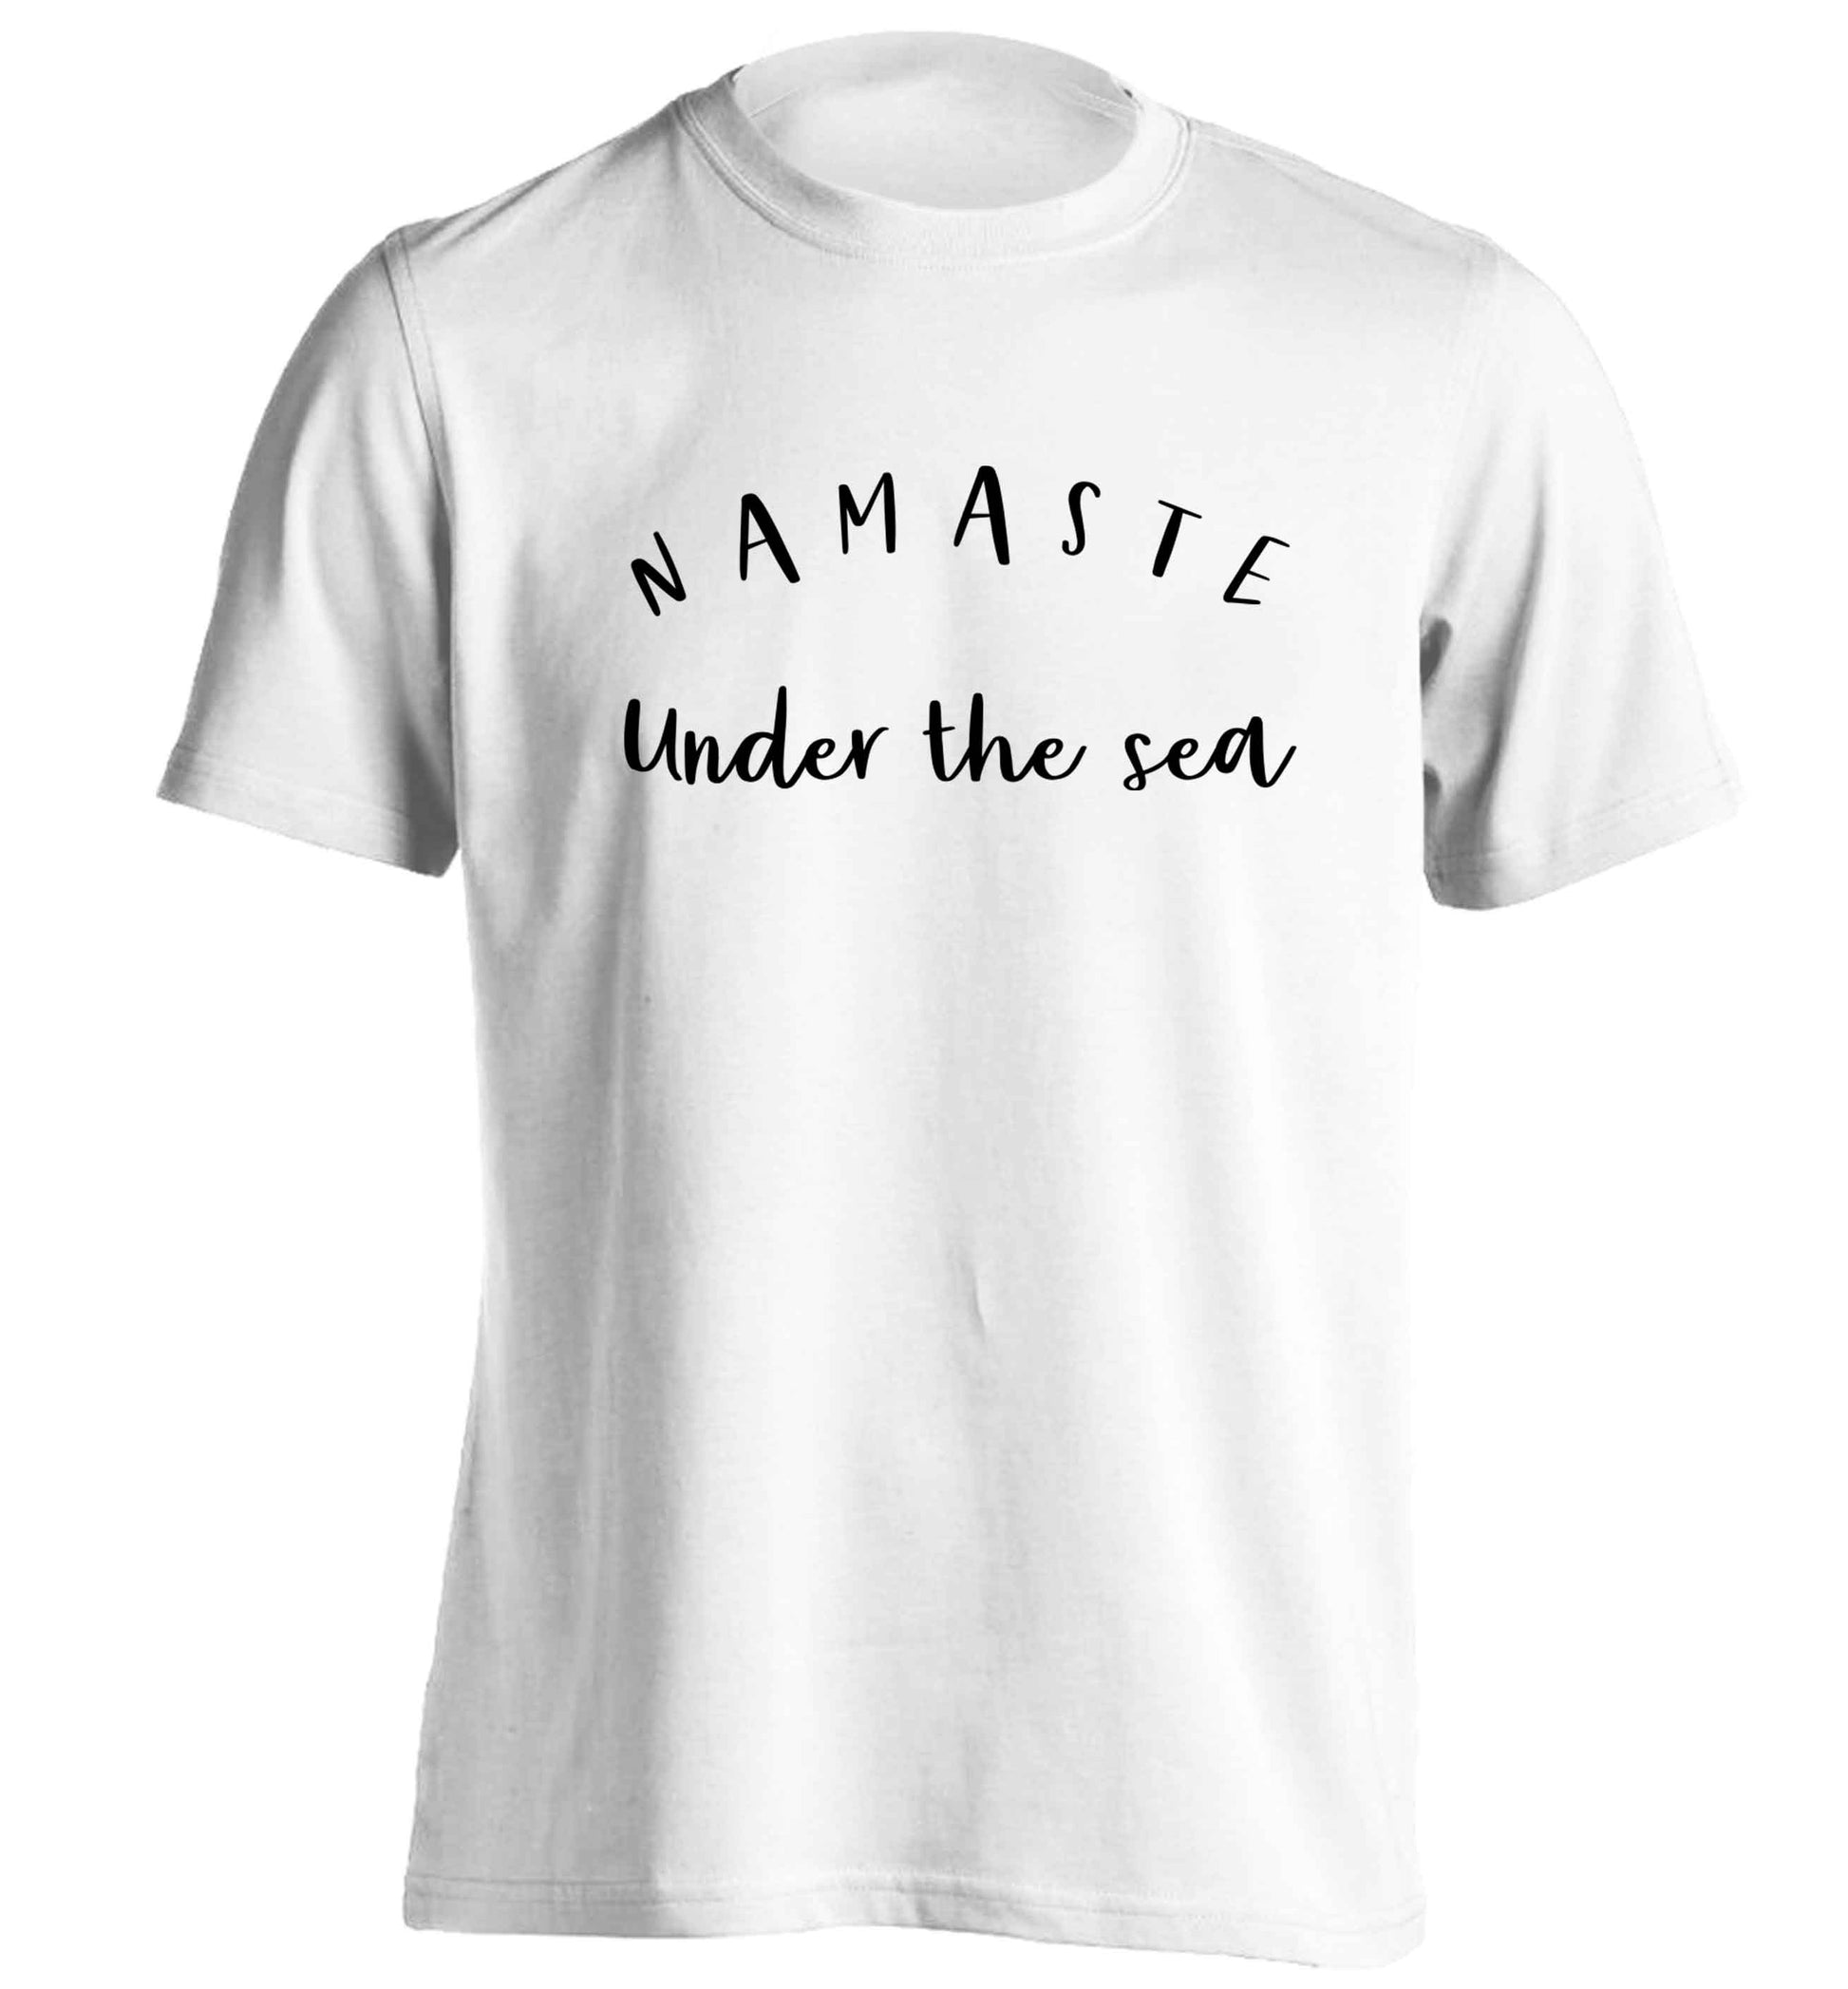 Namaste under the water adults unisex white Tshirt 2XL